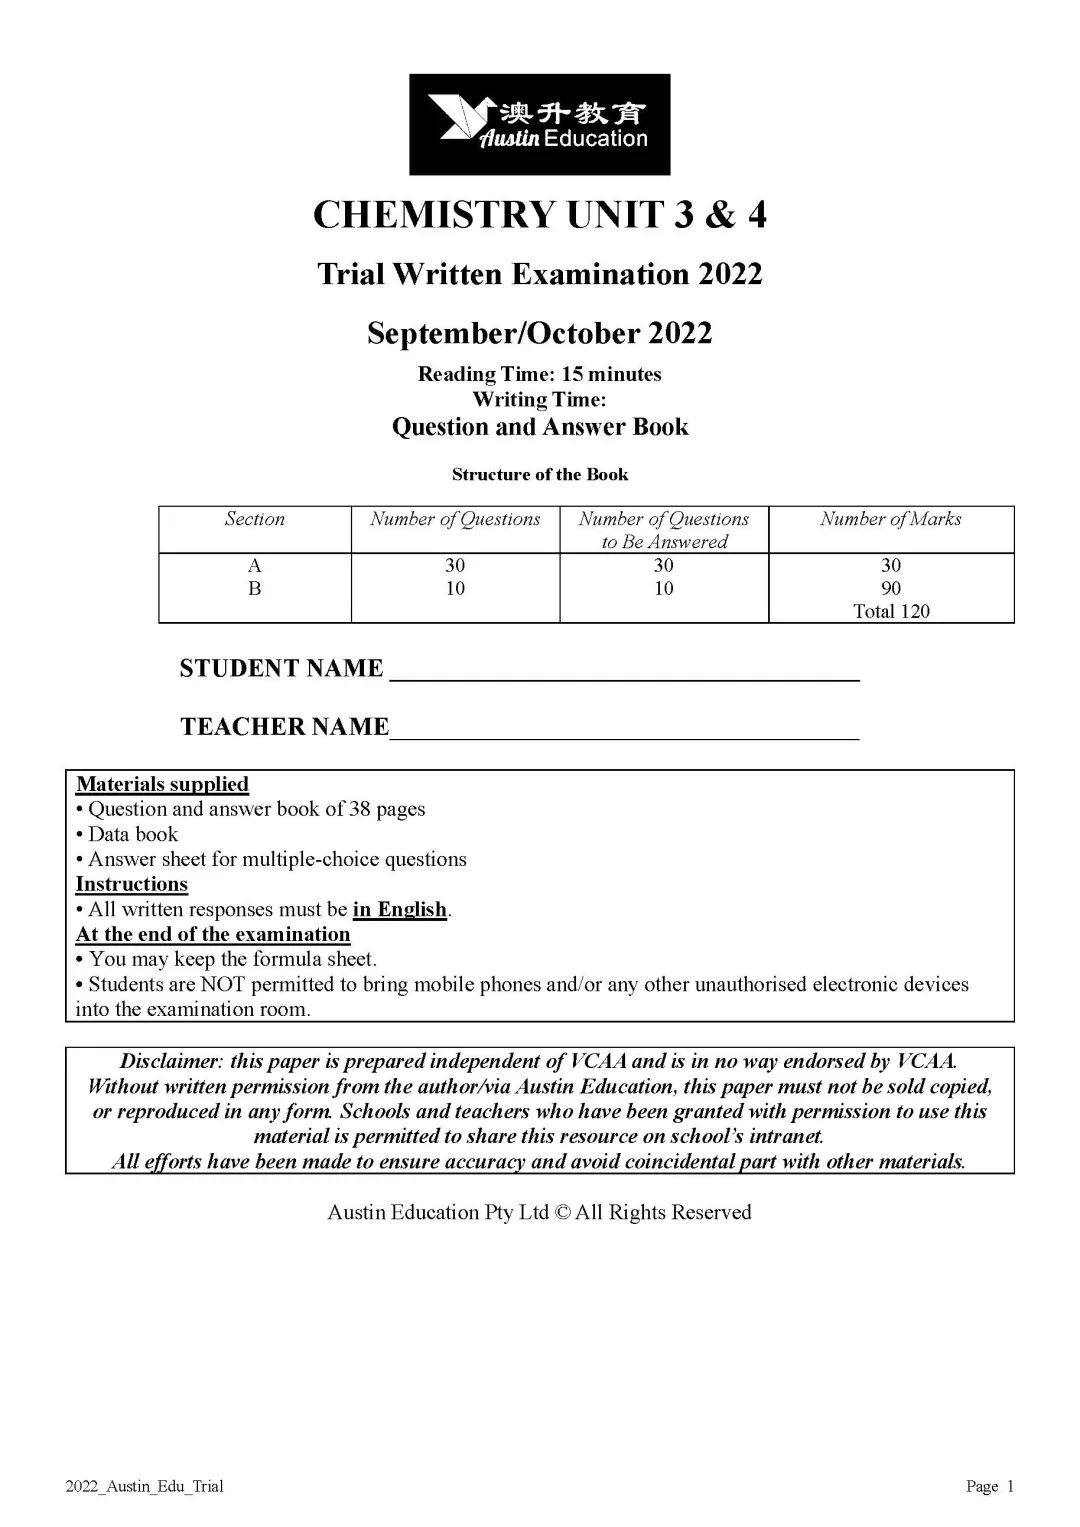 vce 2022 exam dates - 01